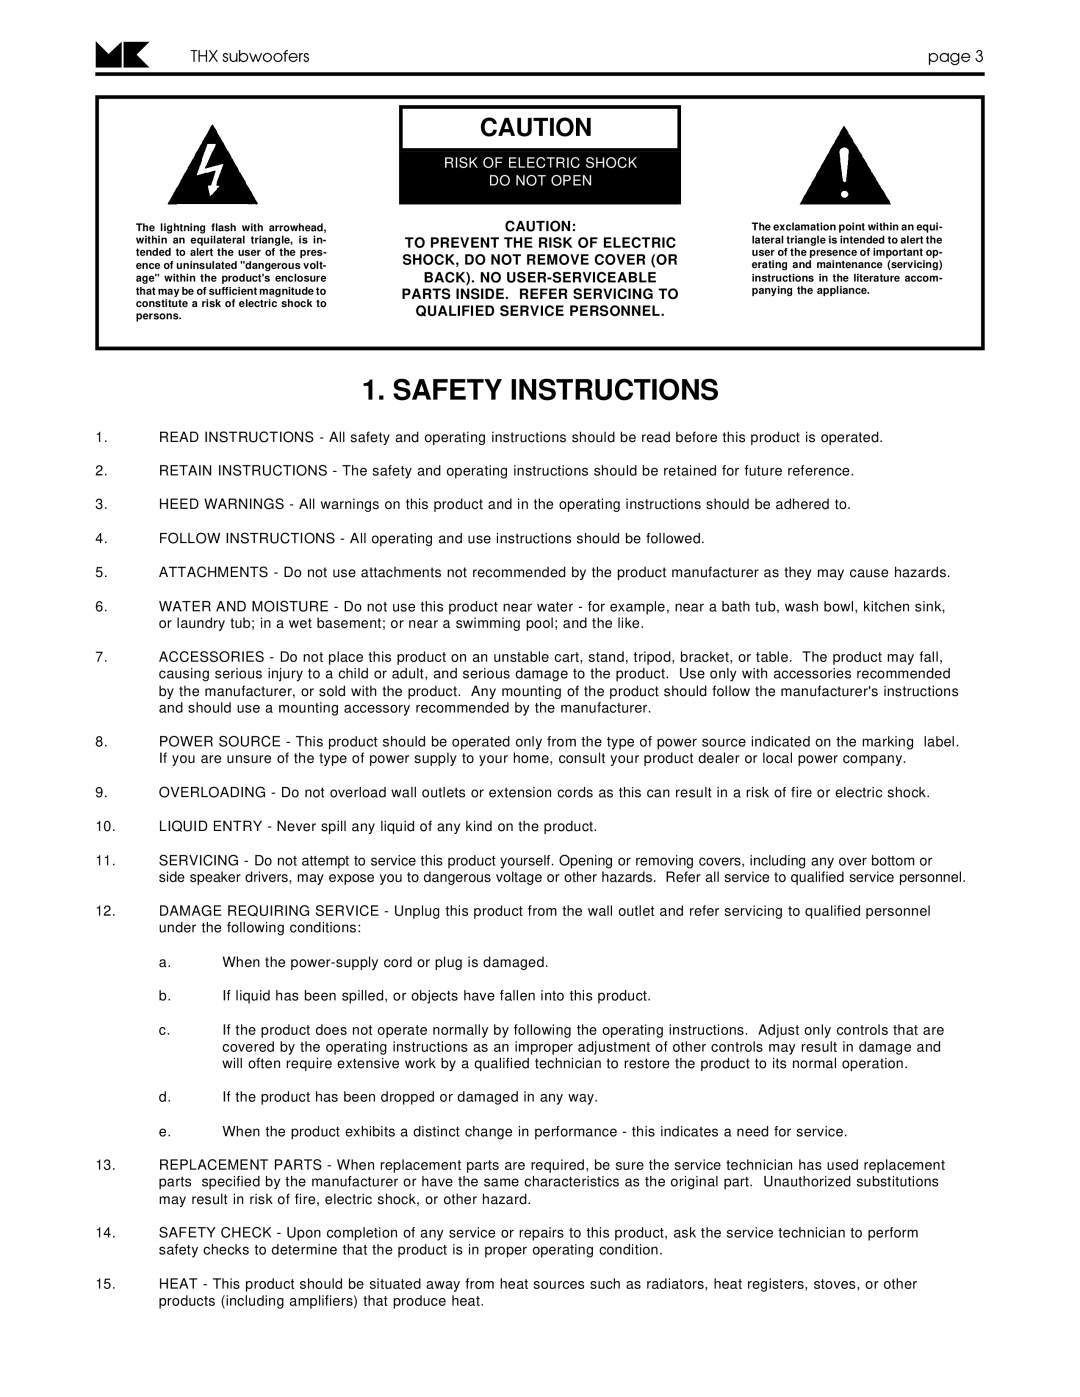 MK Sound MX-5000THX Mk II, MX-350THX operation manual Safety Instructions, THX subwooferspage 